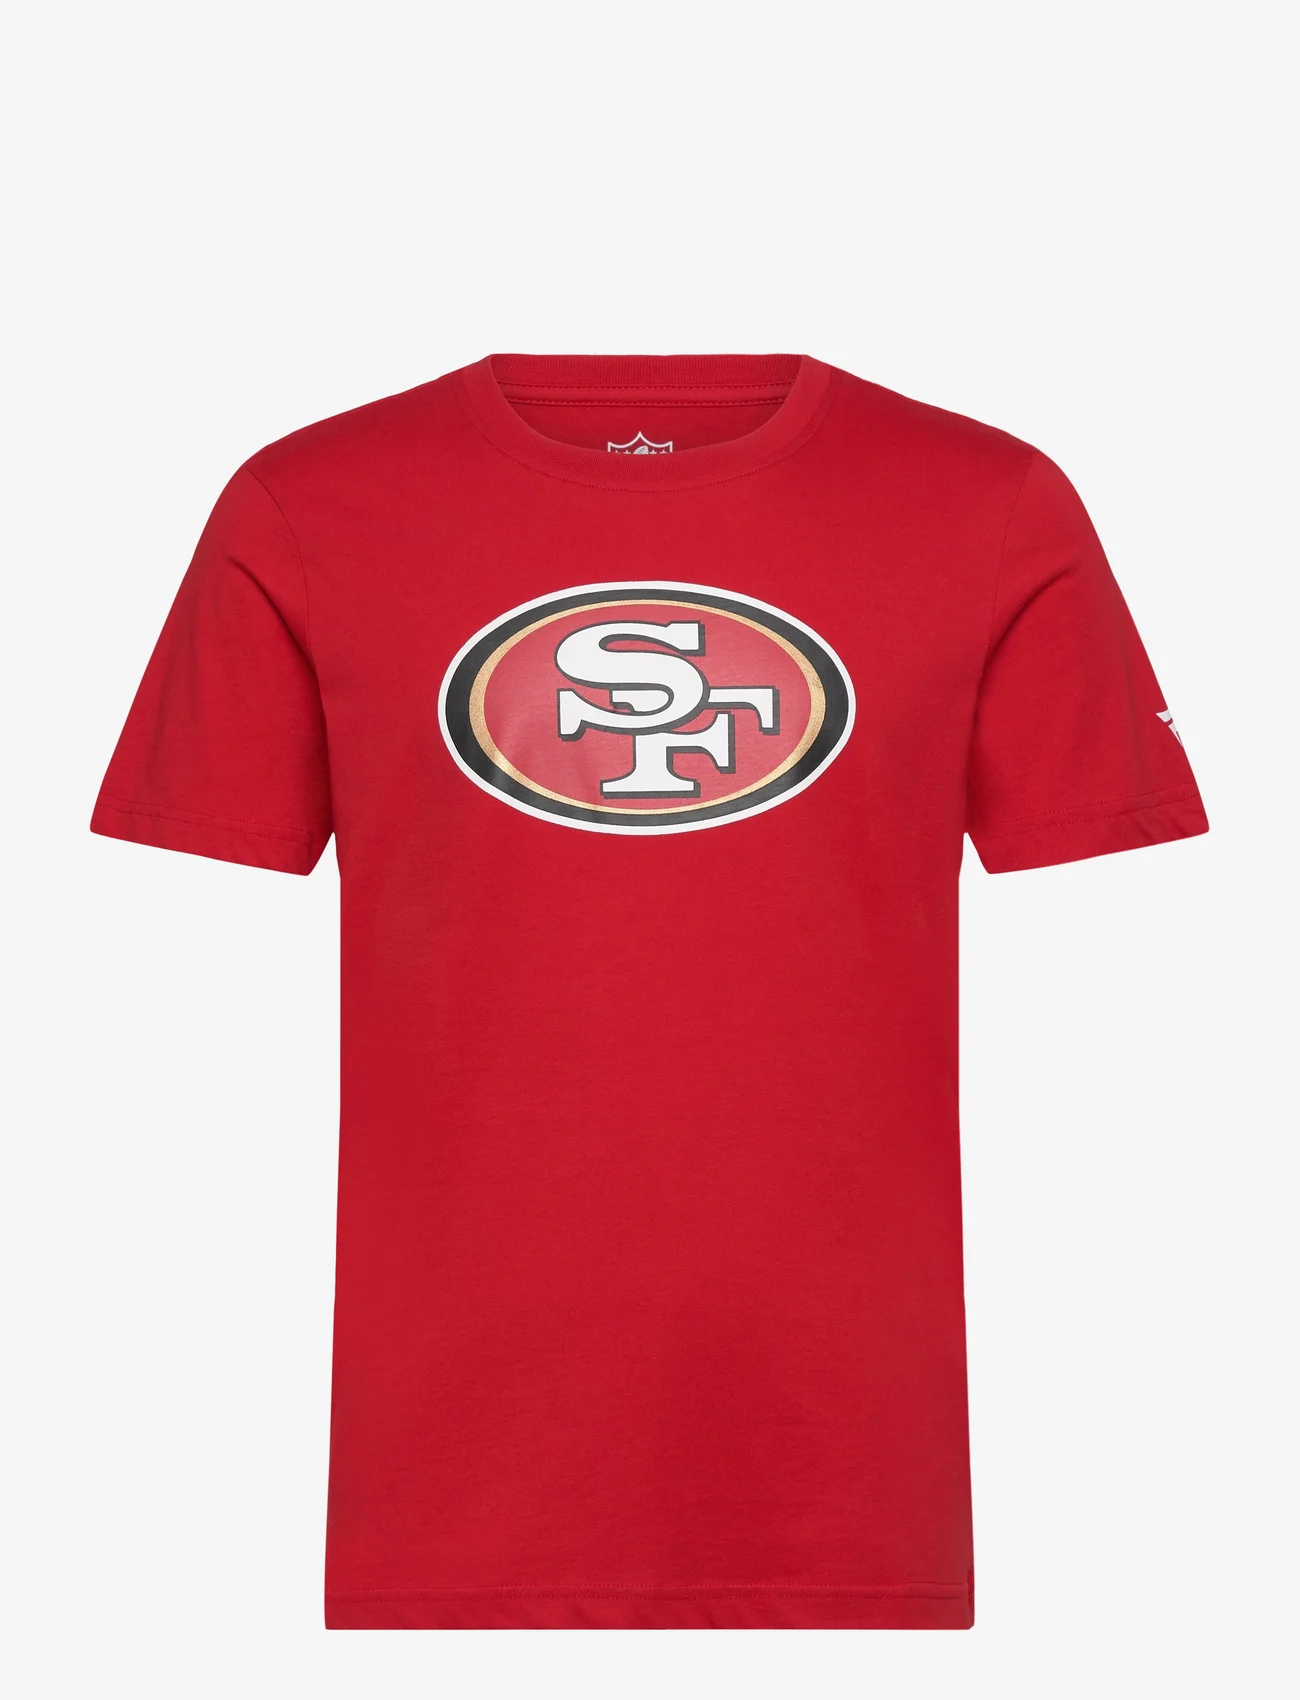 Fanatics - San Francisco 49ers Primary Logo Graphic T-Shirt - lowest prices - samba red - 0